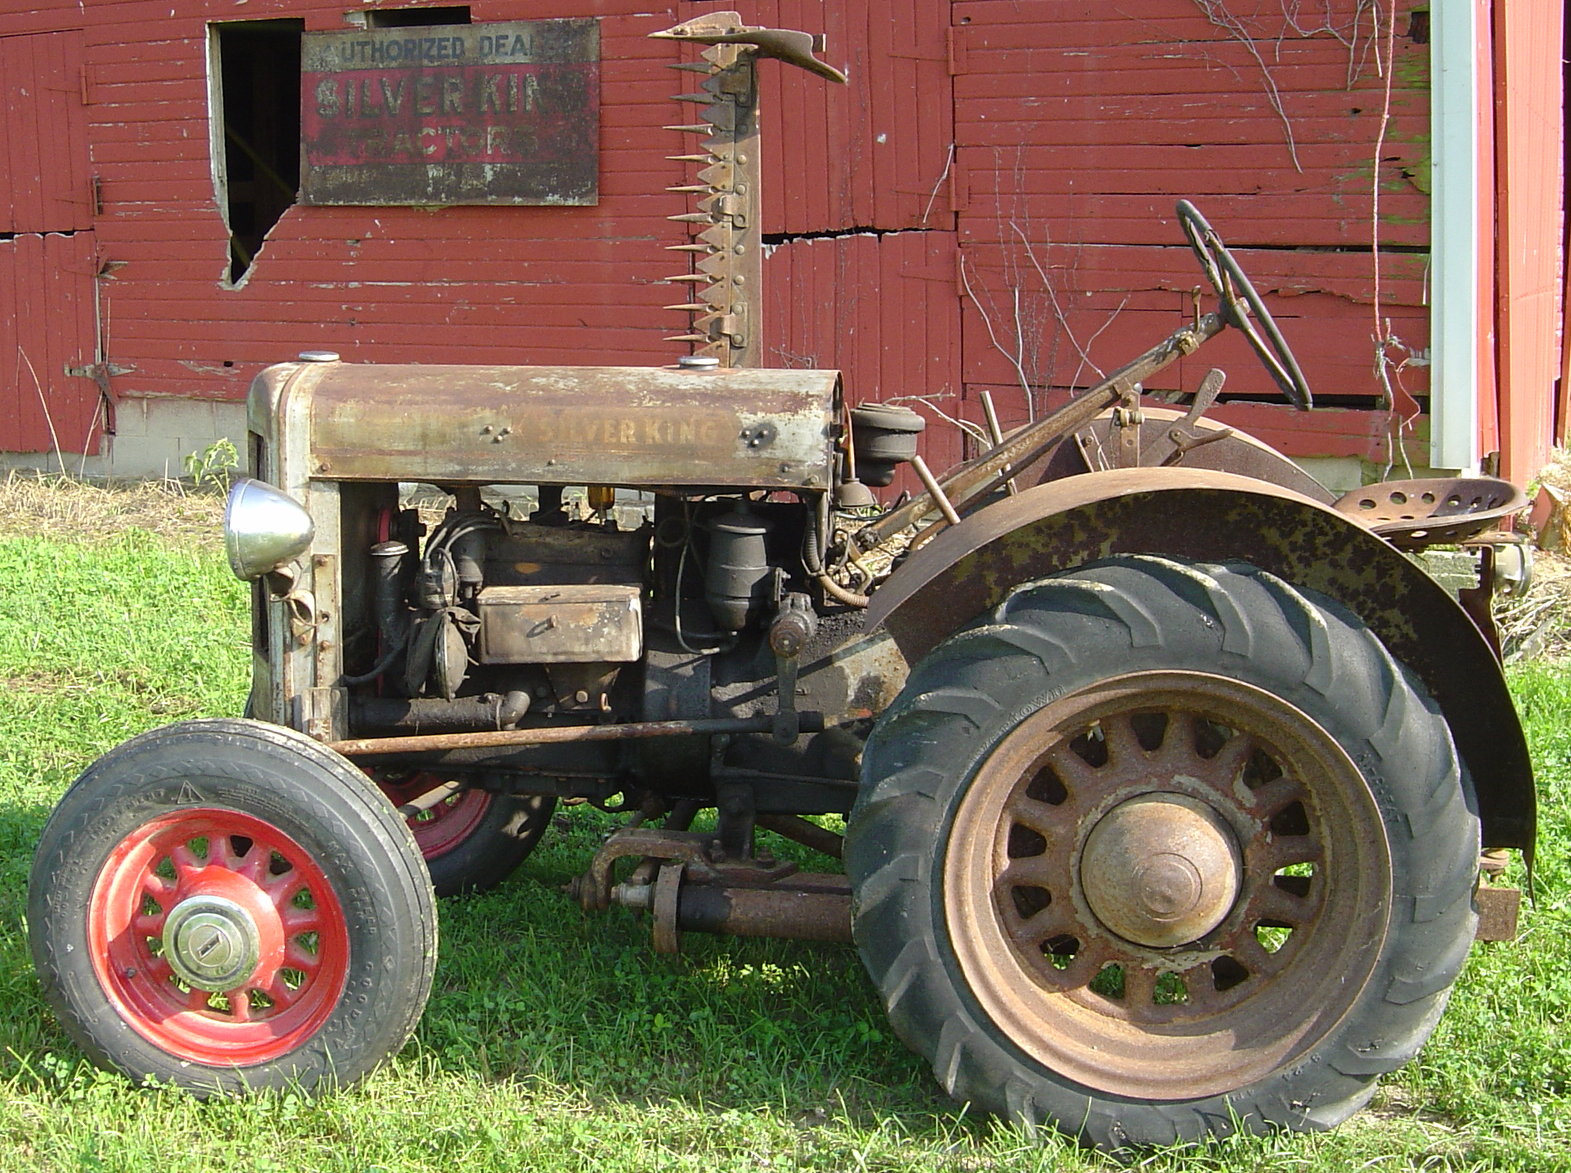 Above: Original 1936 R44 Highway mower tractor with original chrome ...